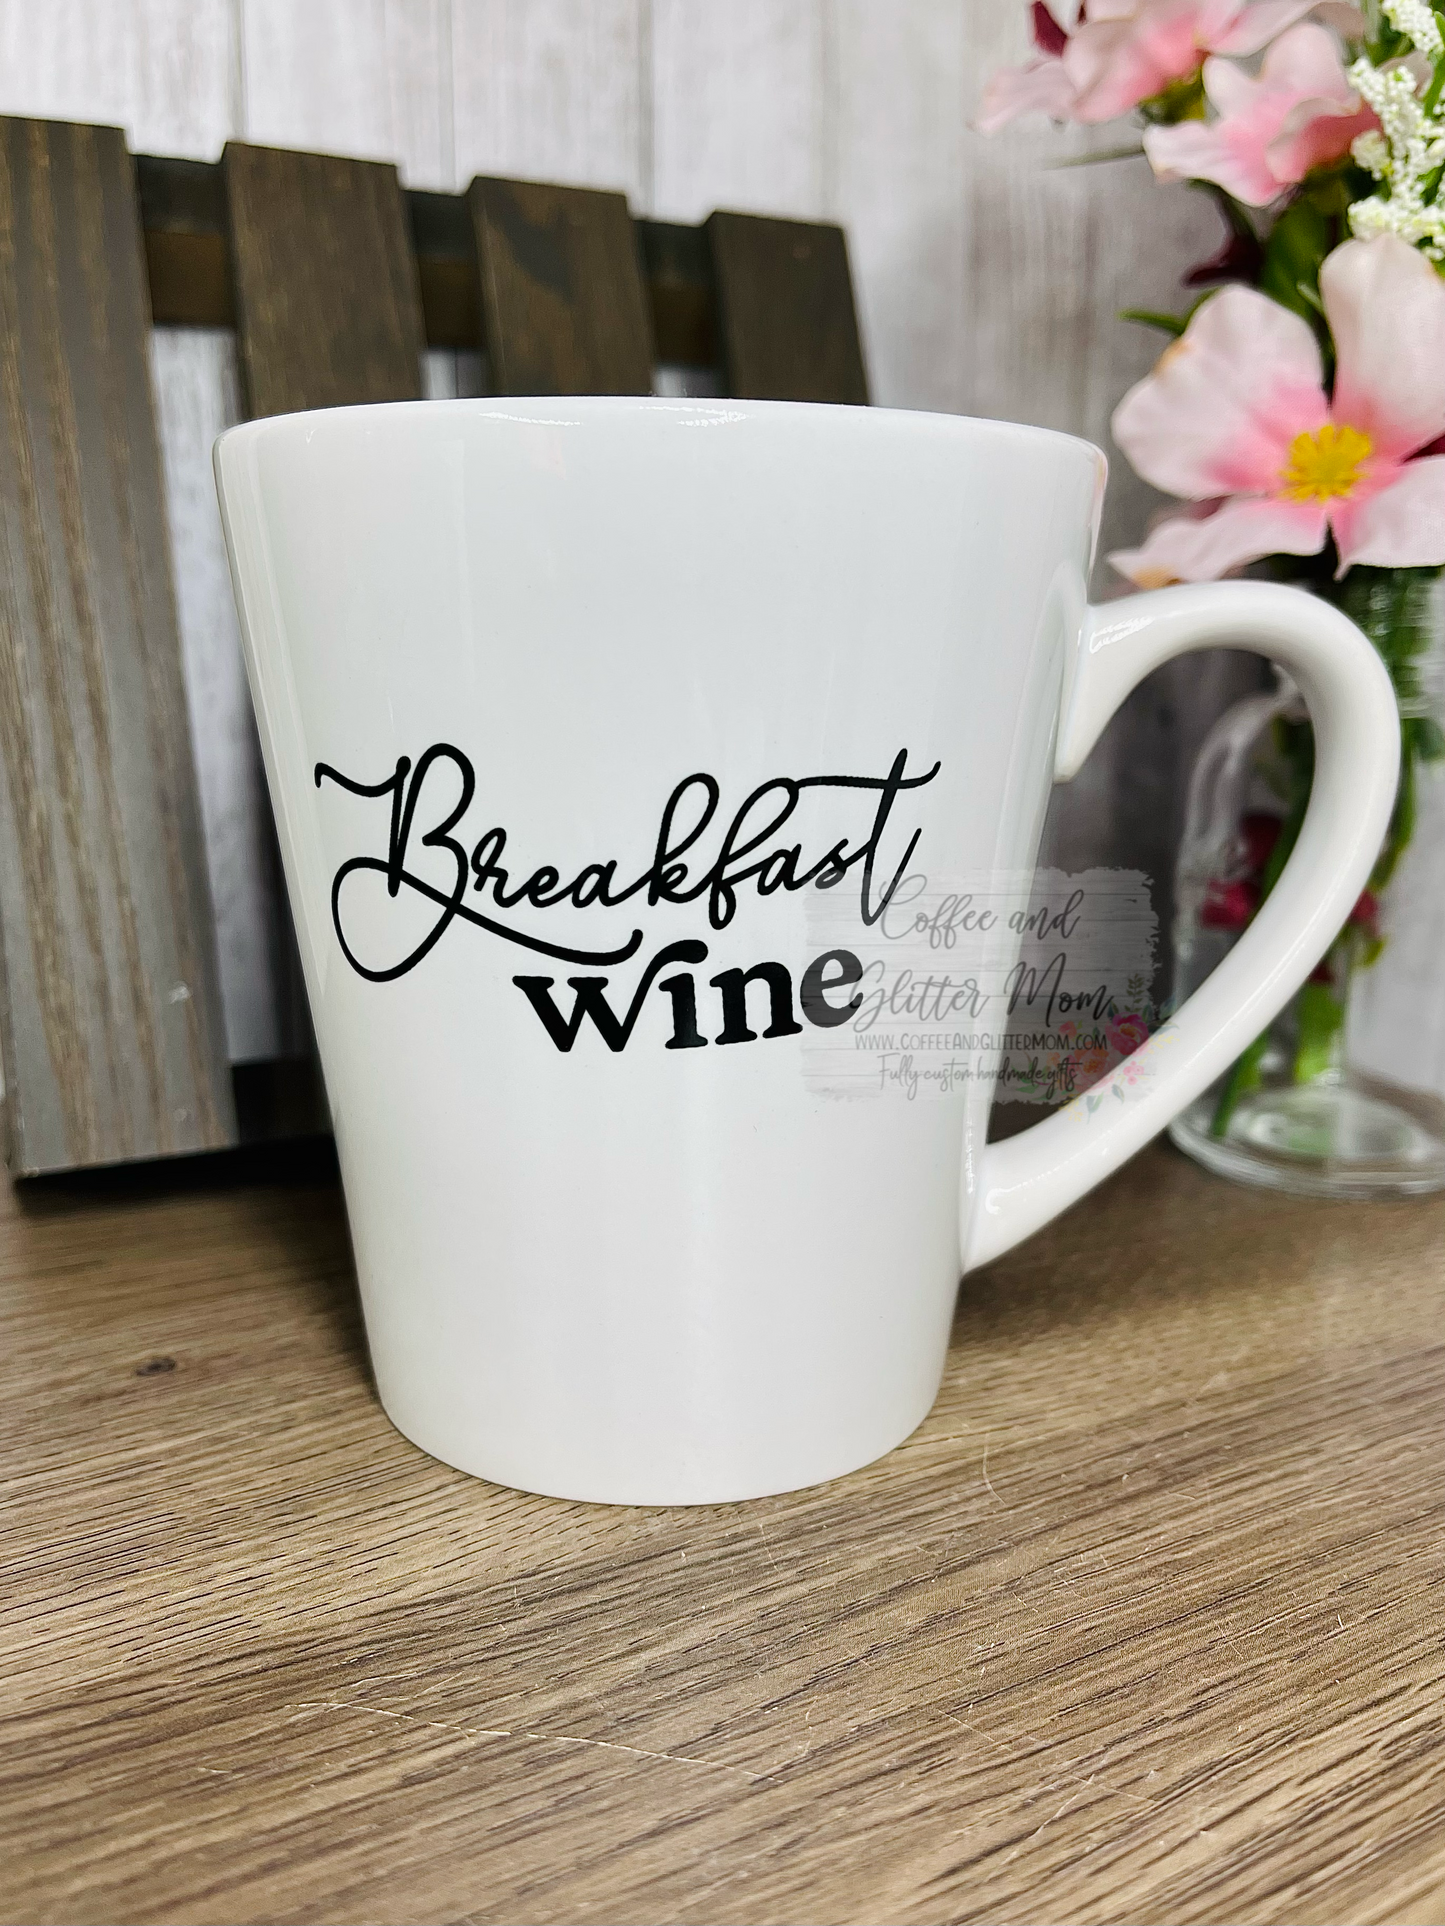 Breakfast Wine/#MomLife 12oz Ceramic Mug